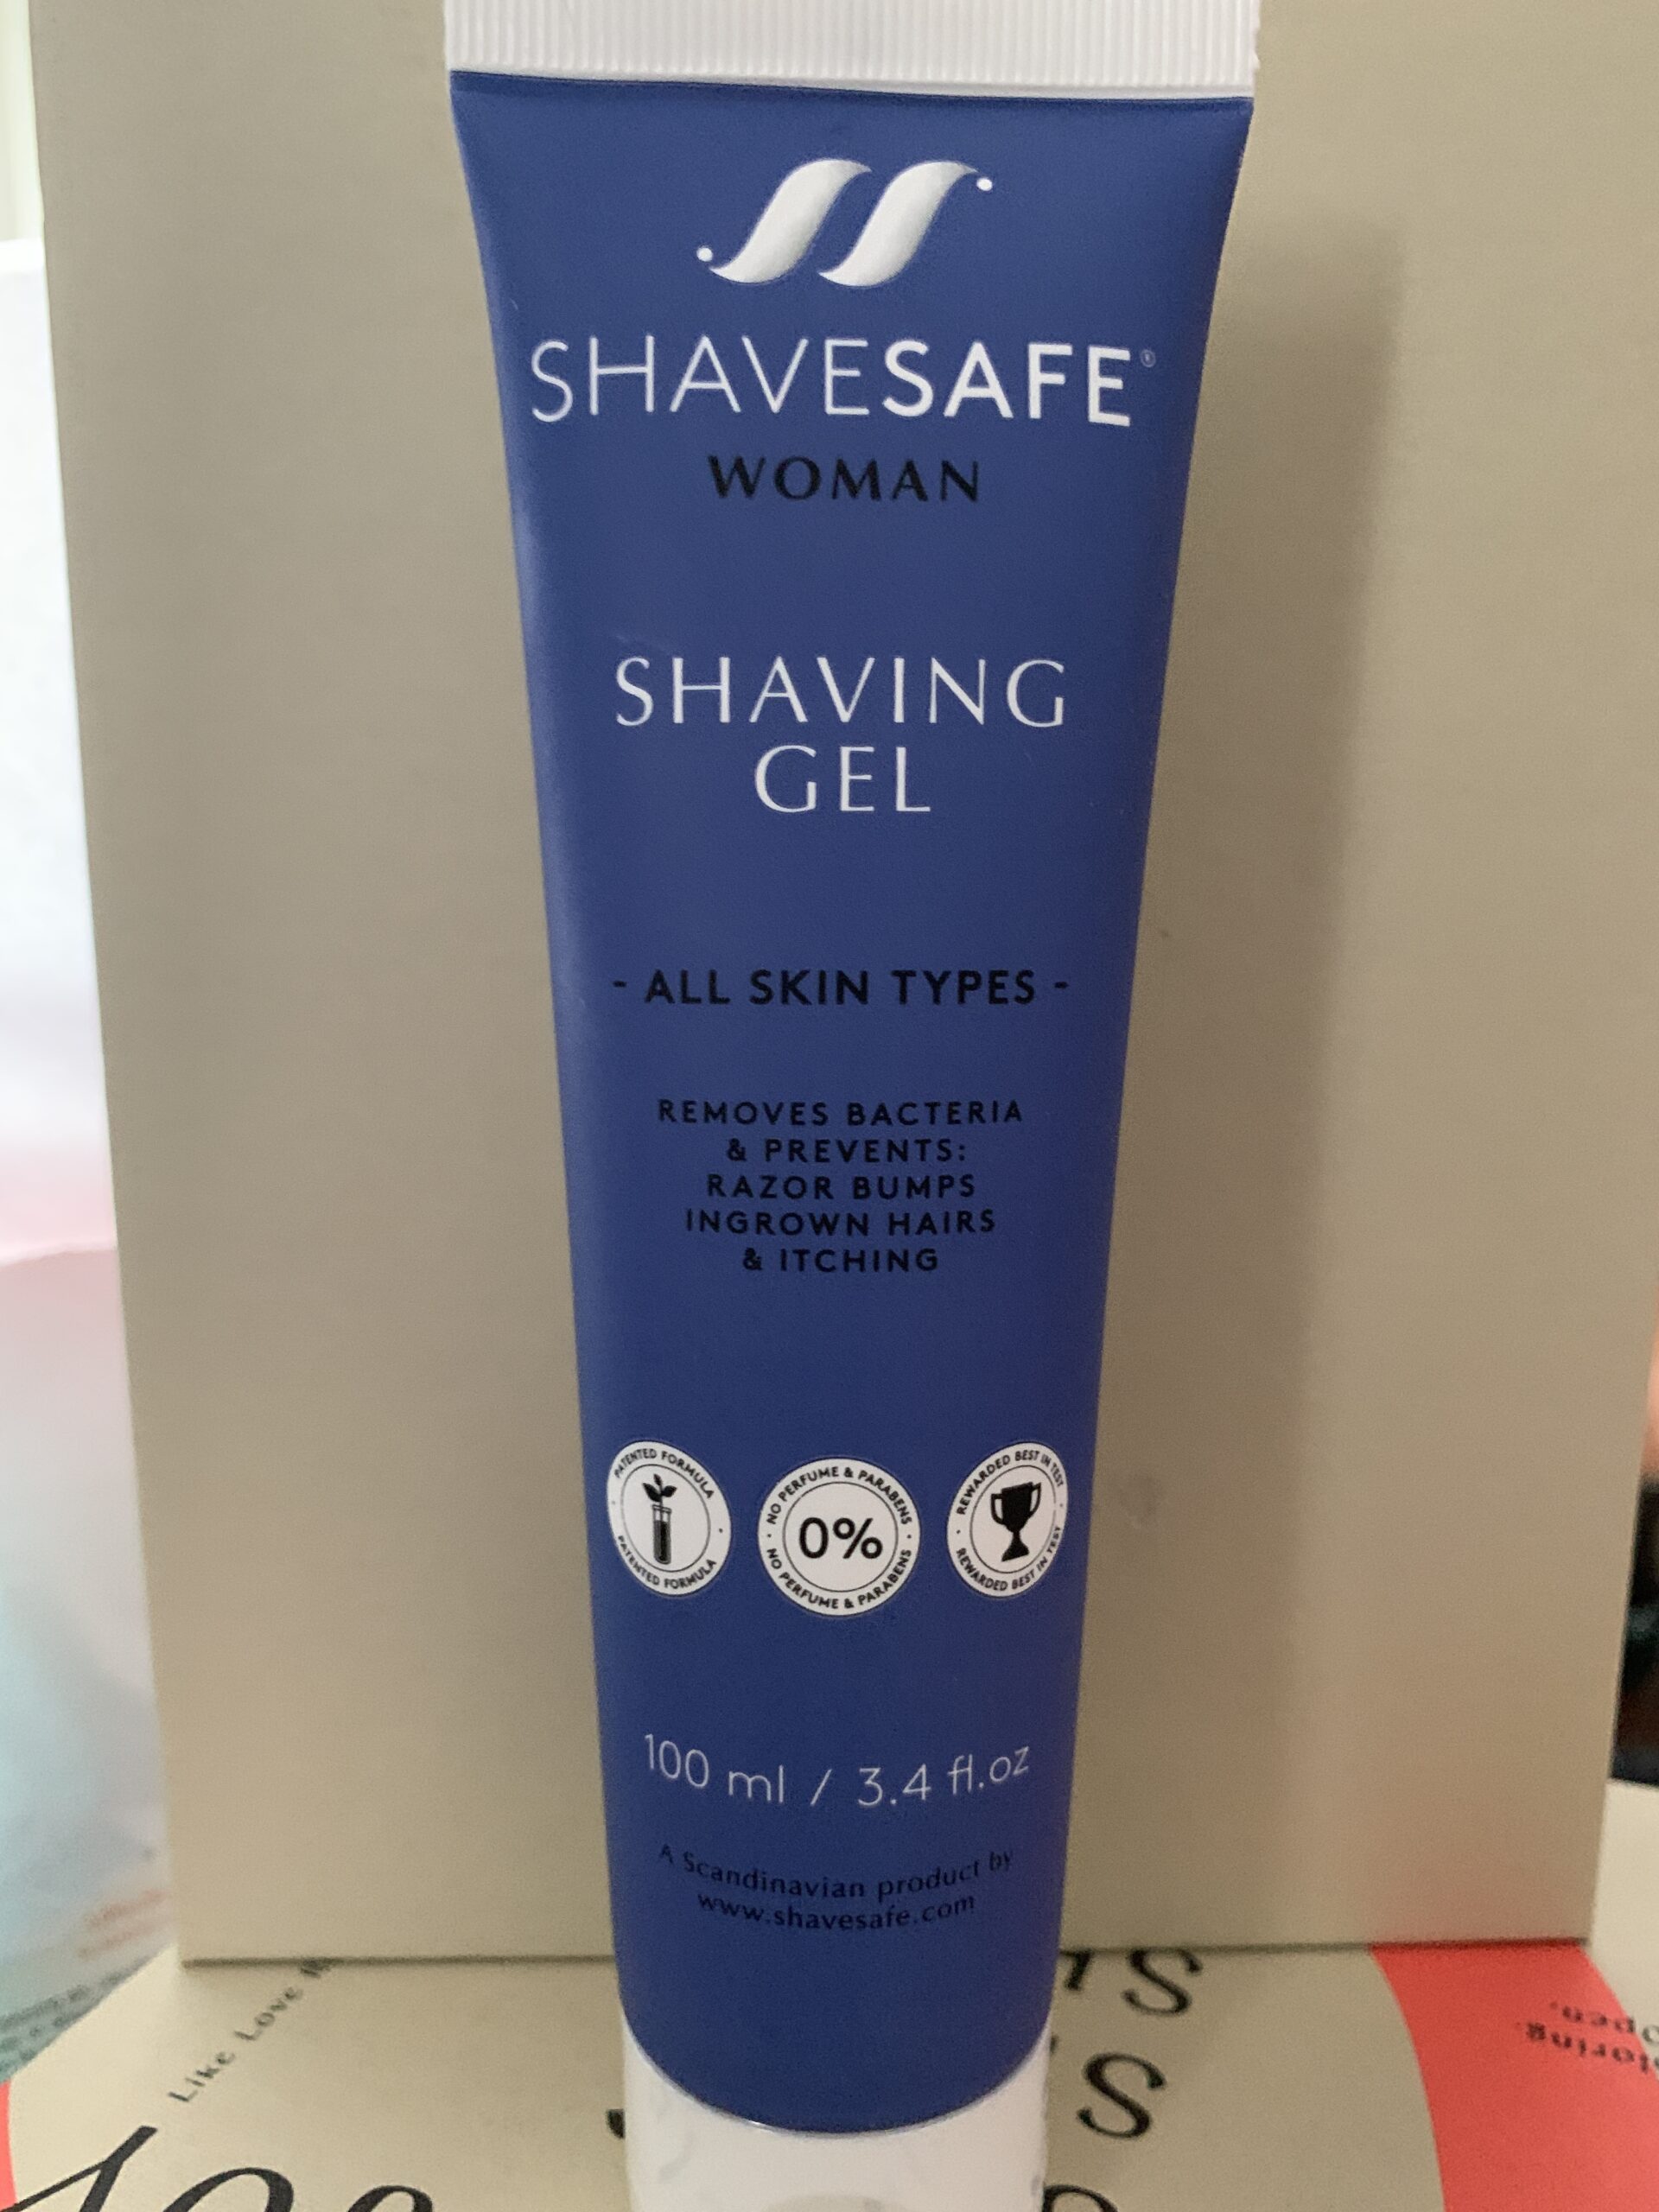 Shavesafe woman shaving gel